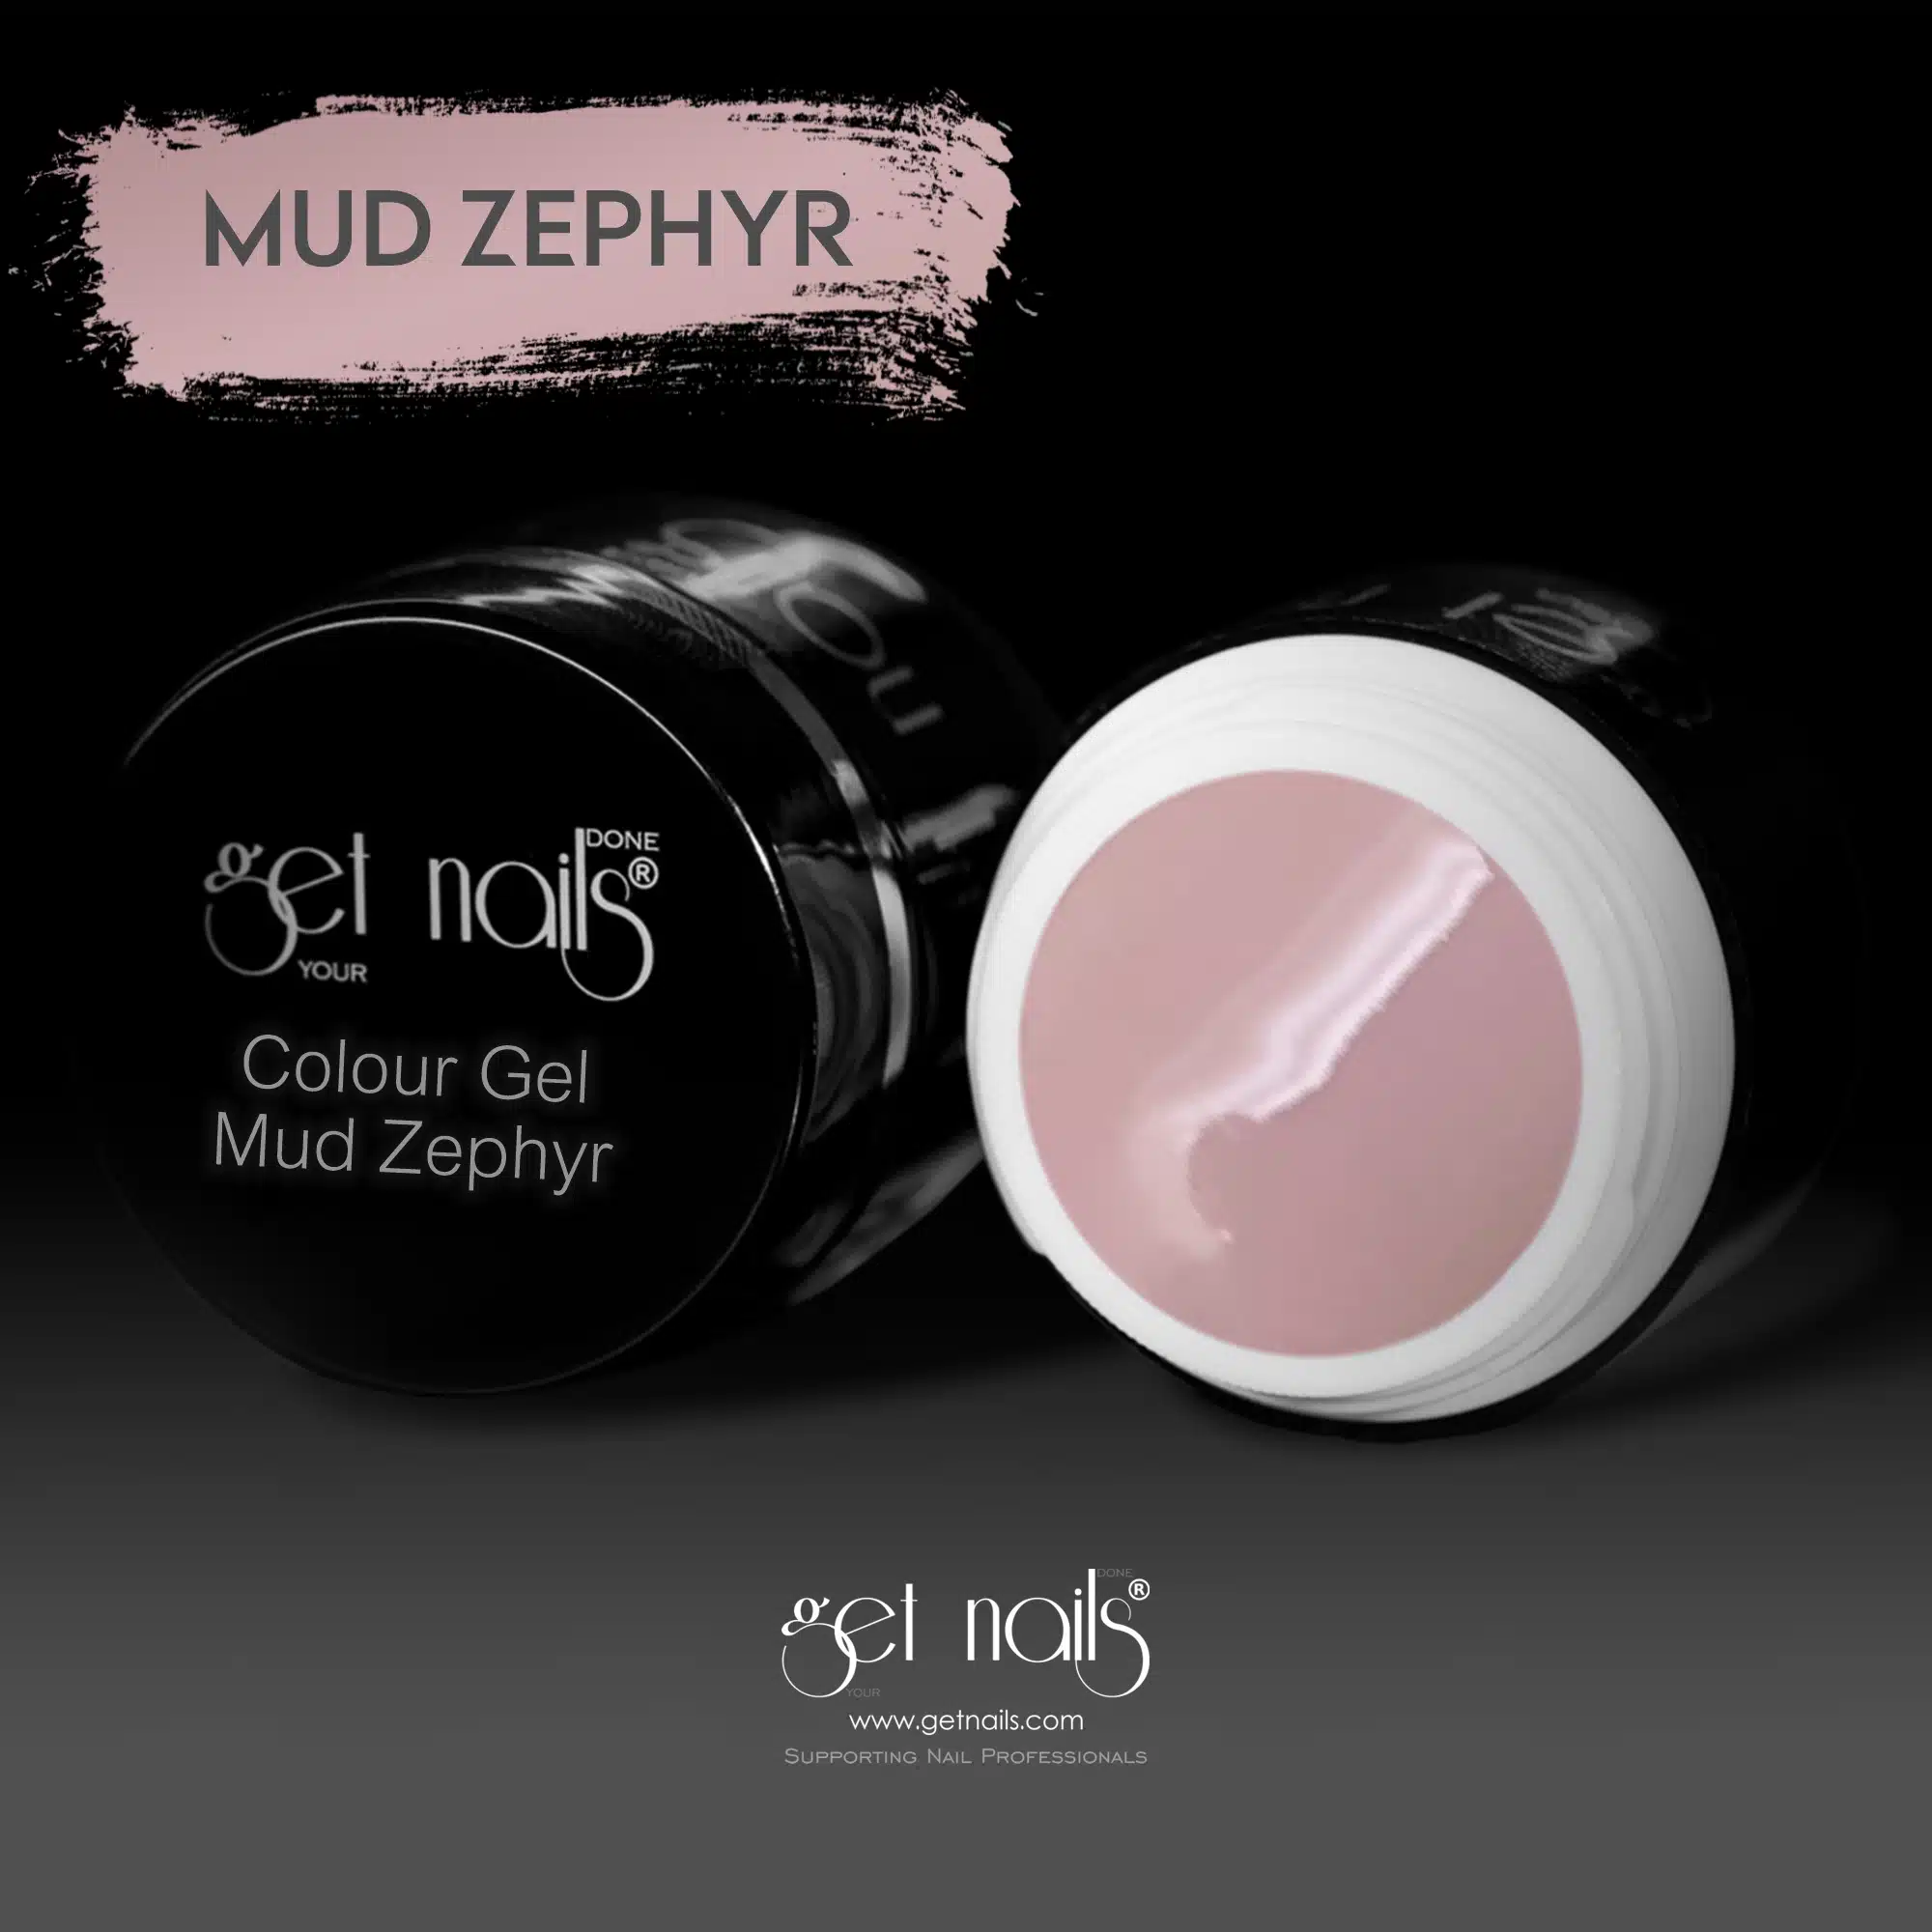 Get Nails Austria - Colour Gel Mud Zephyr 5g